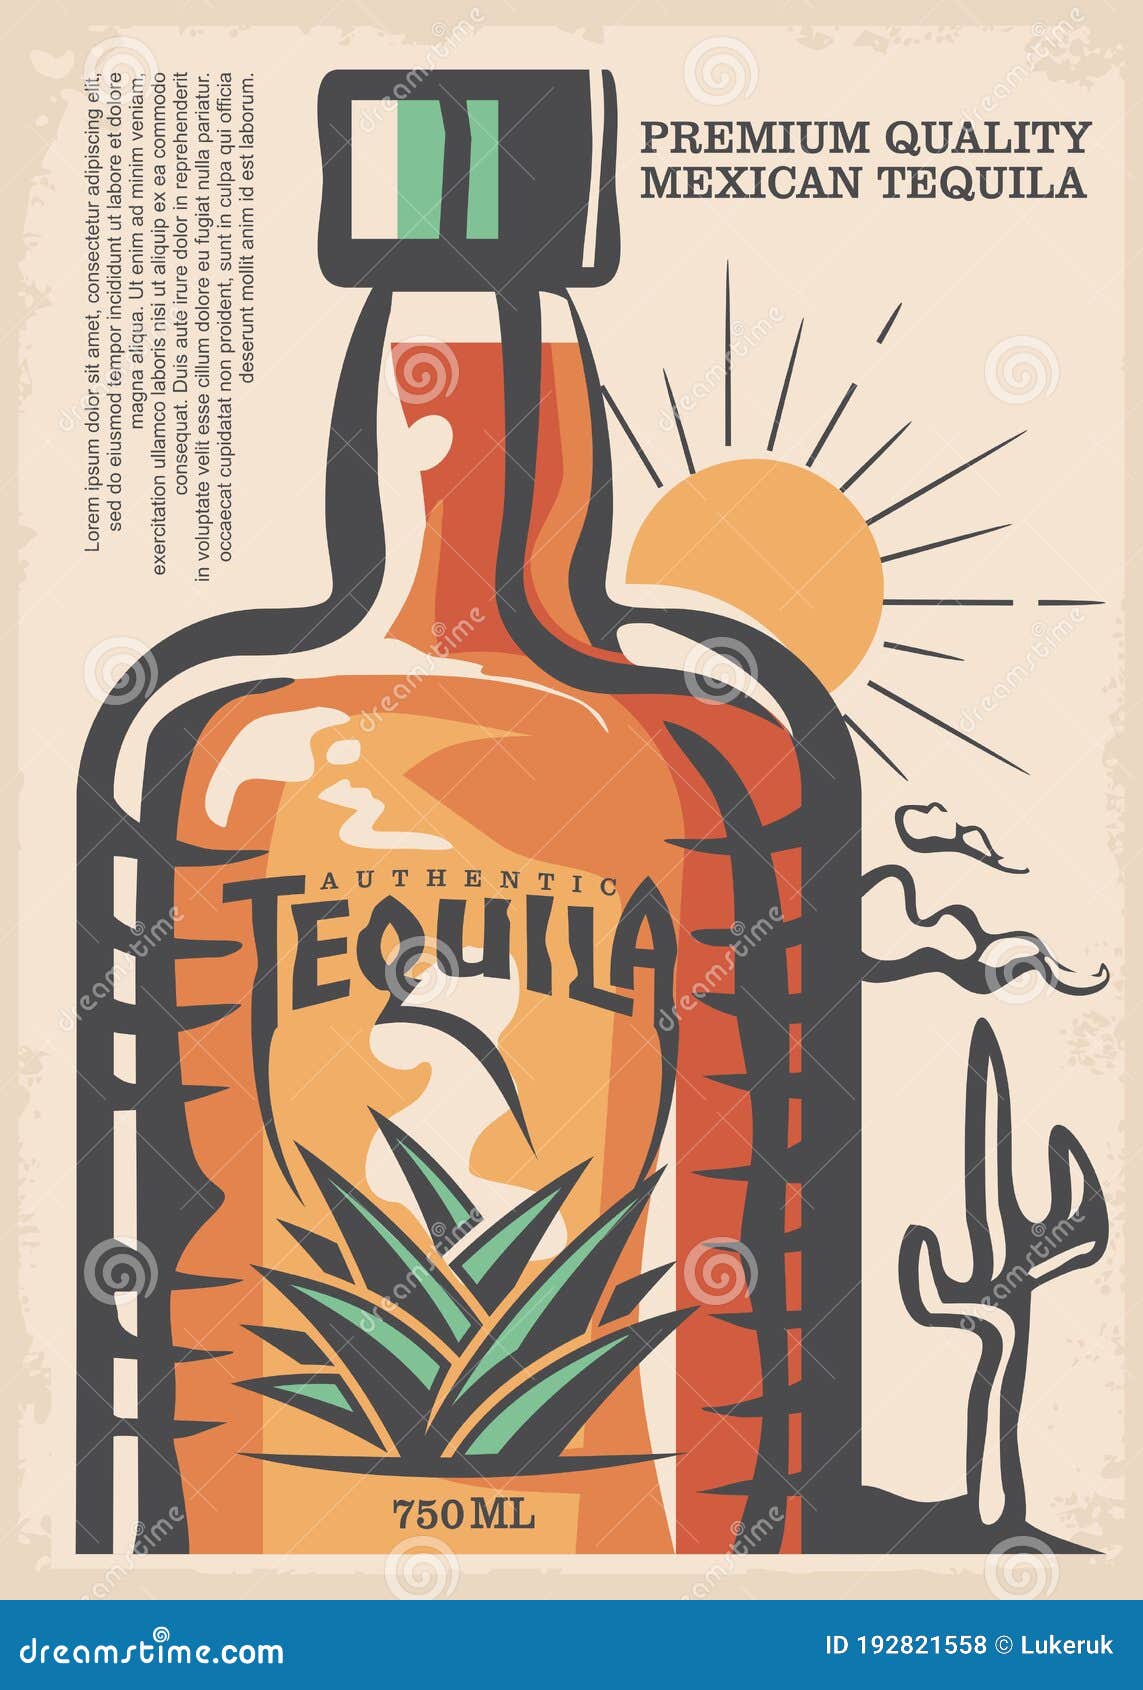 Mexican Tequila Poster Design Stock Vector - of aloa: 192821558